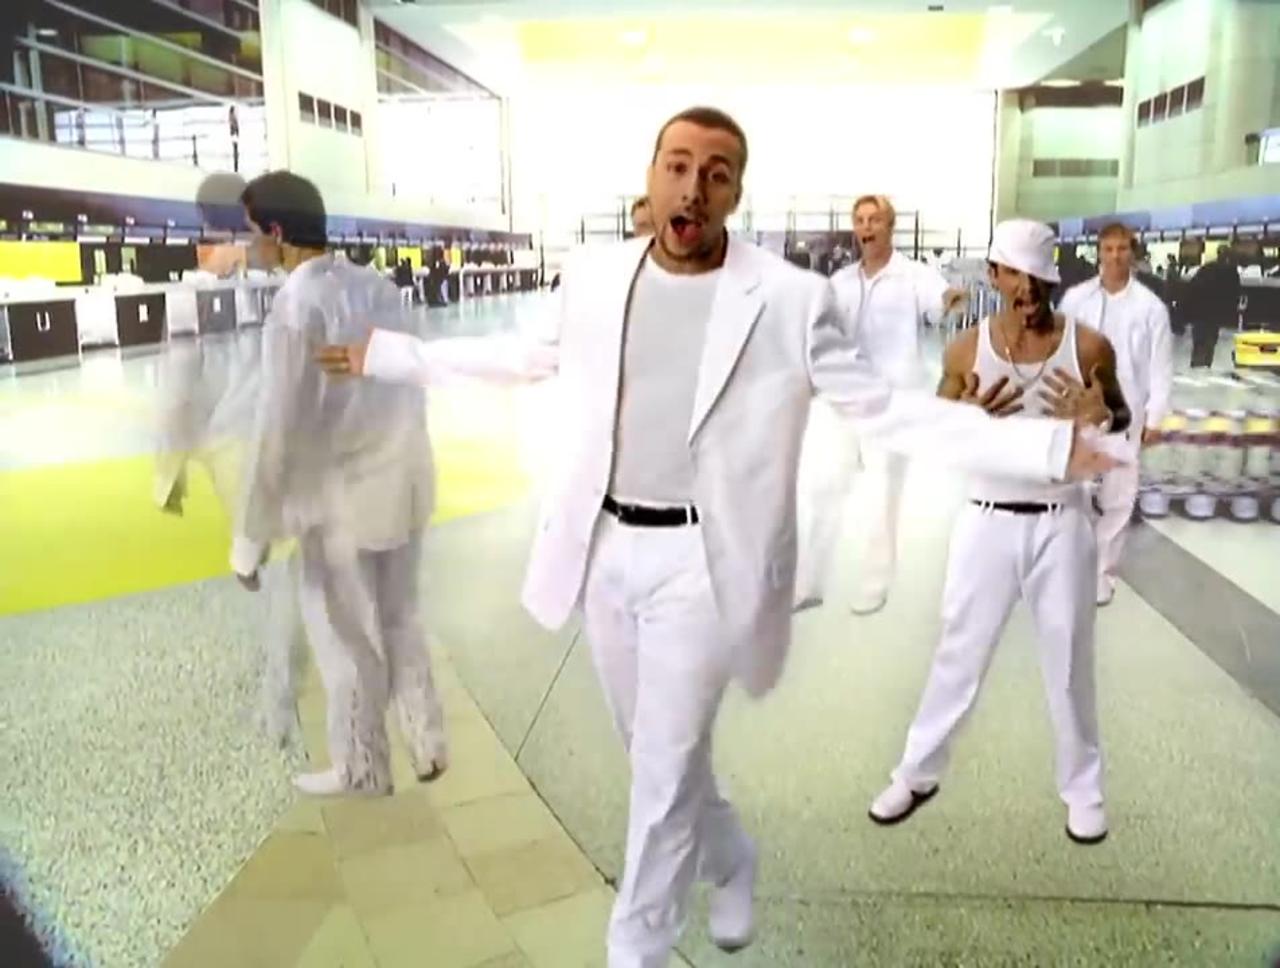 Backstreet Boys - I Want It That Way (Official HD Video)